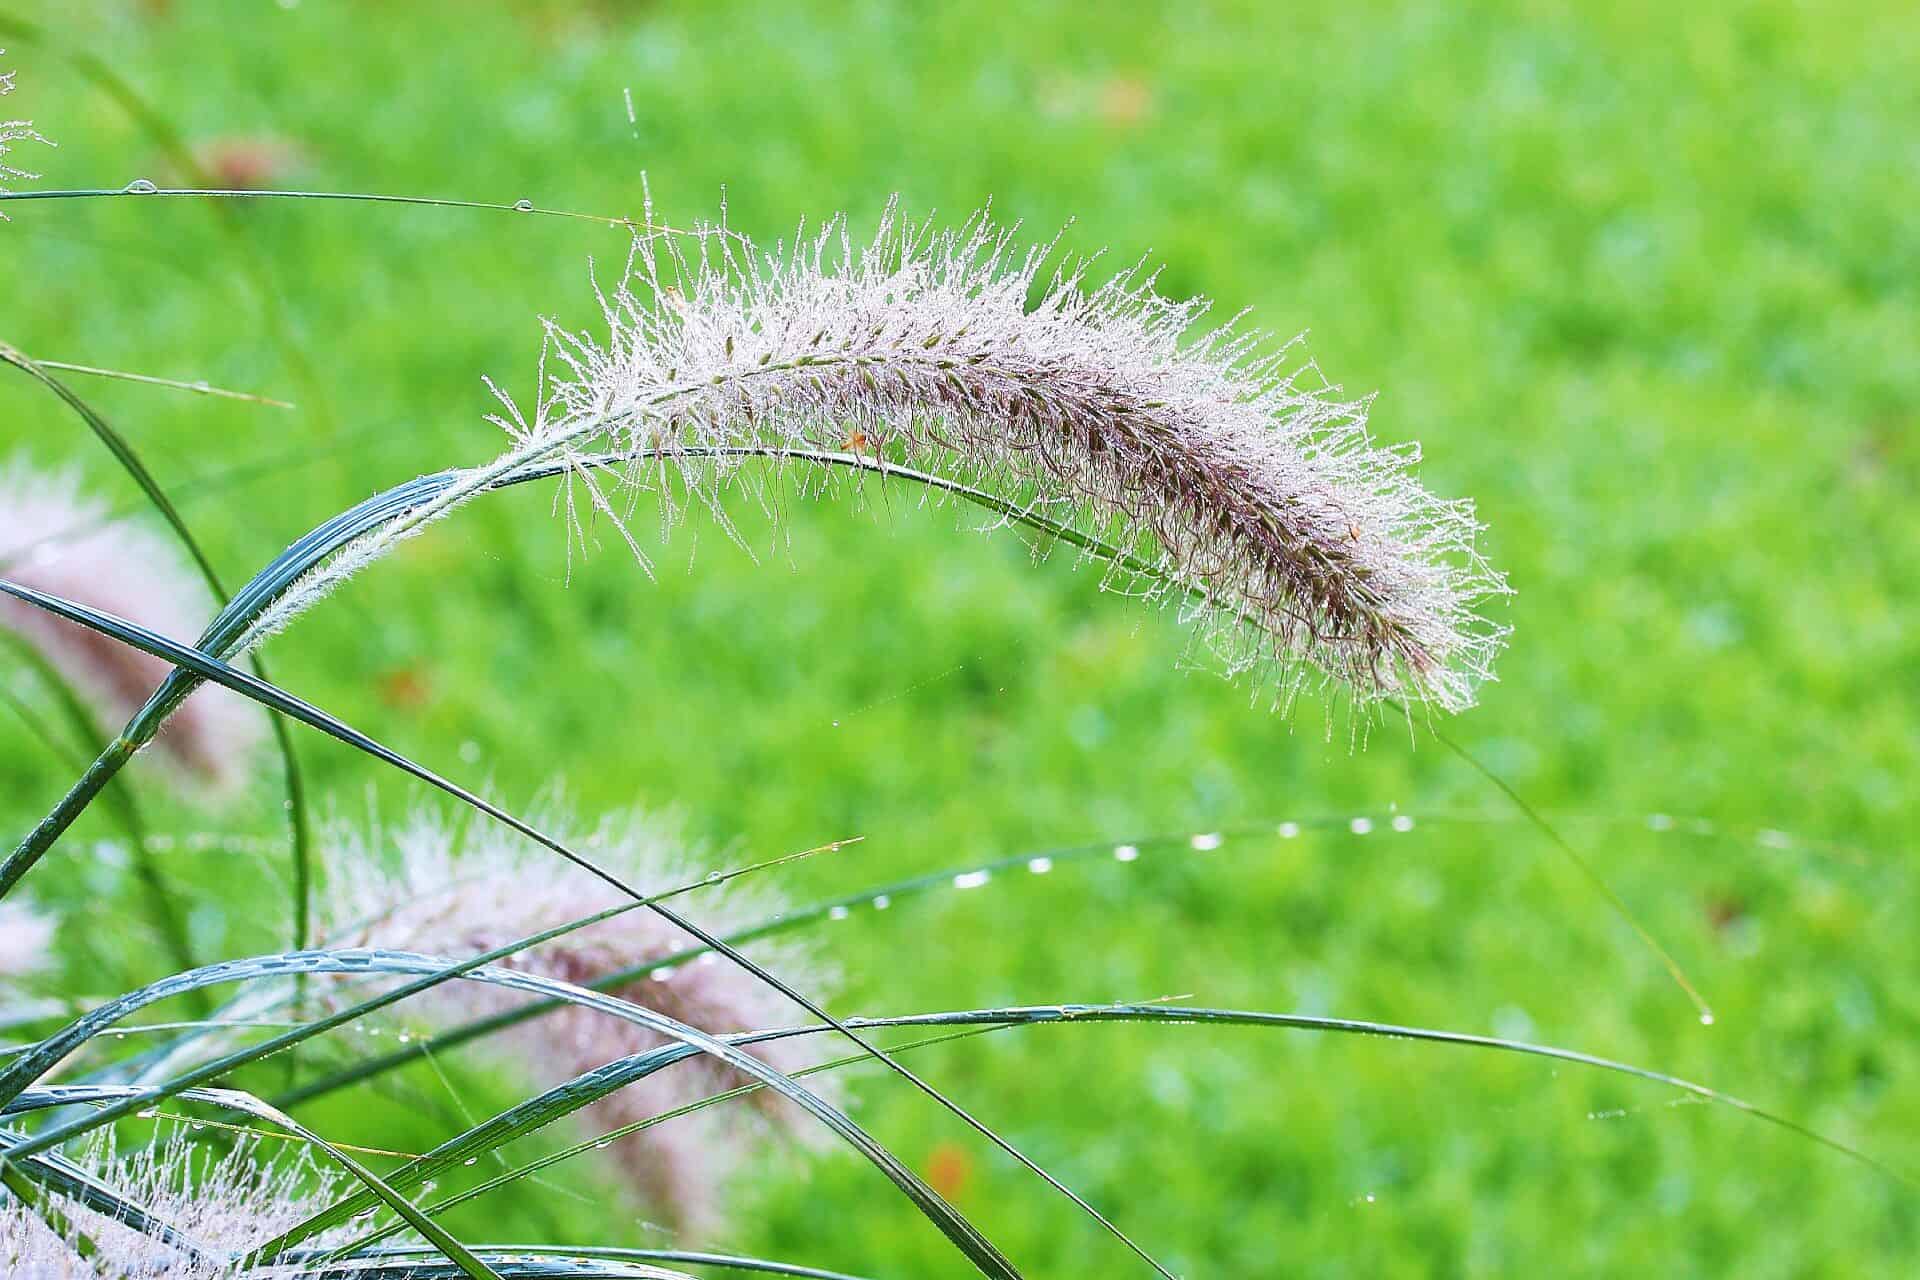 fountain grass